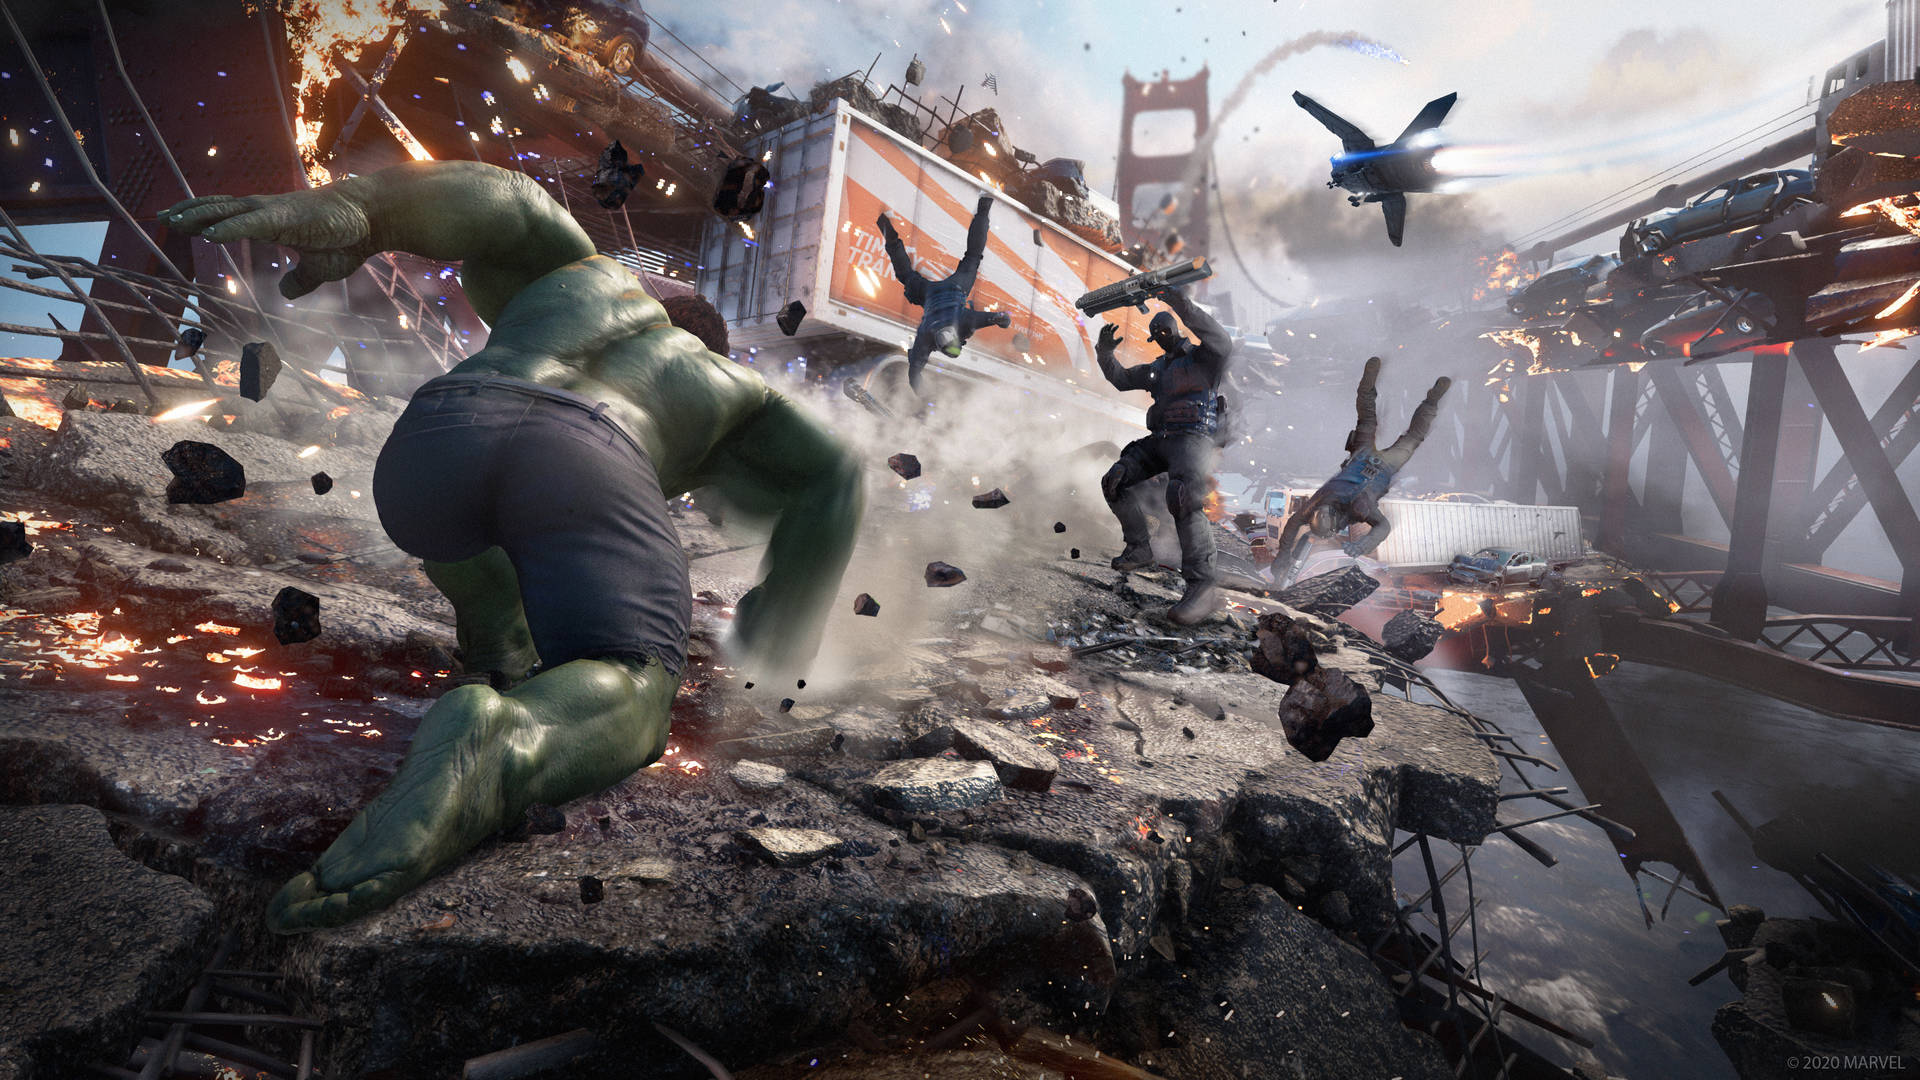 4k Avengers Hulk Smash Background